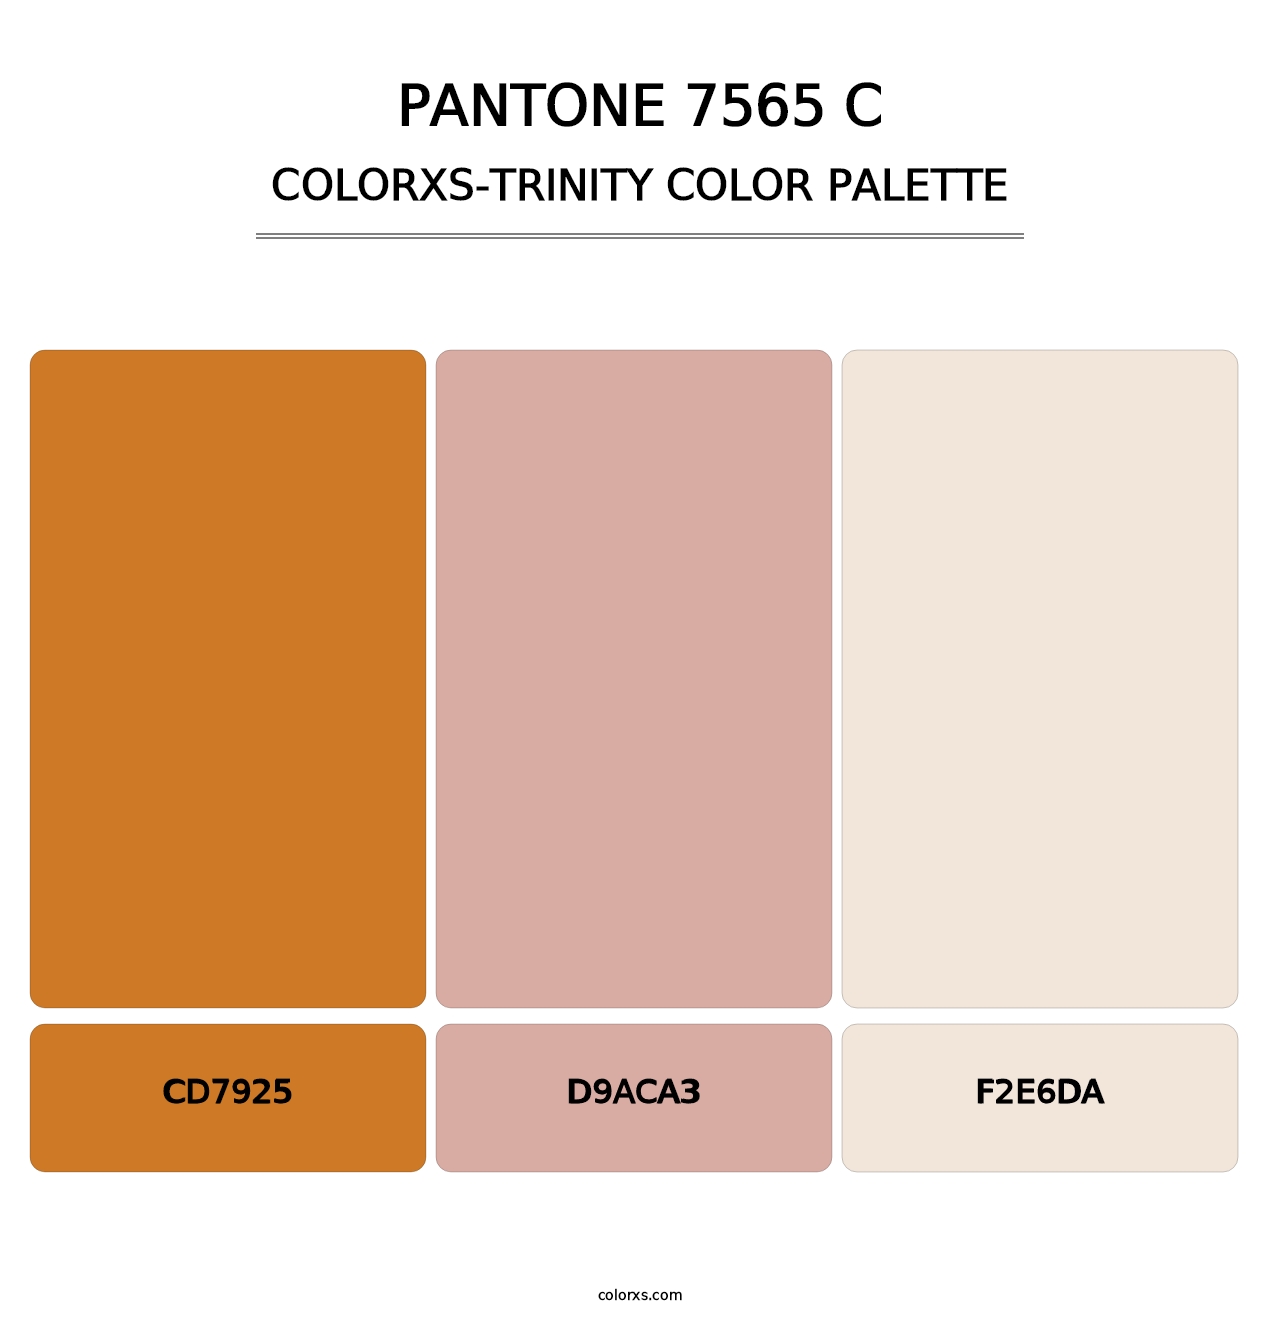 PANTONE 7565 C - Colorxs Trinity Palette